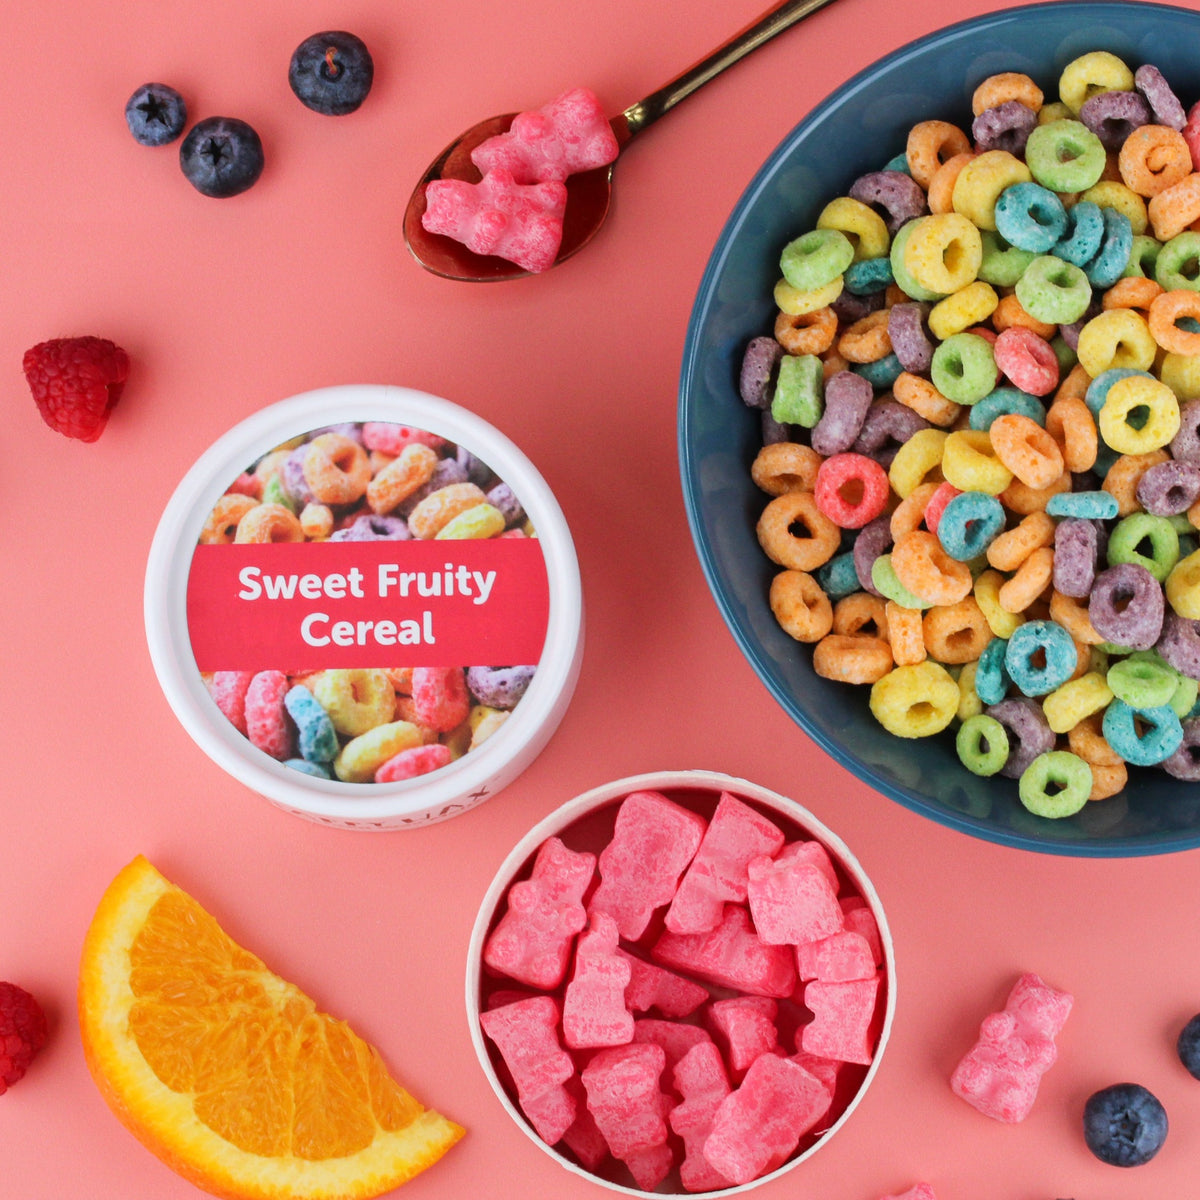 Fruity Loops Wax Melts / Food Shaped Wax Melts – Sugar and Spice CC